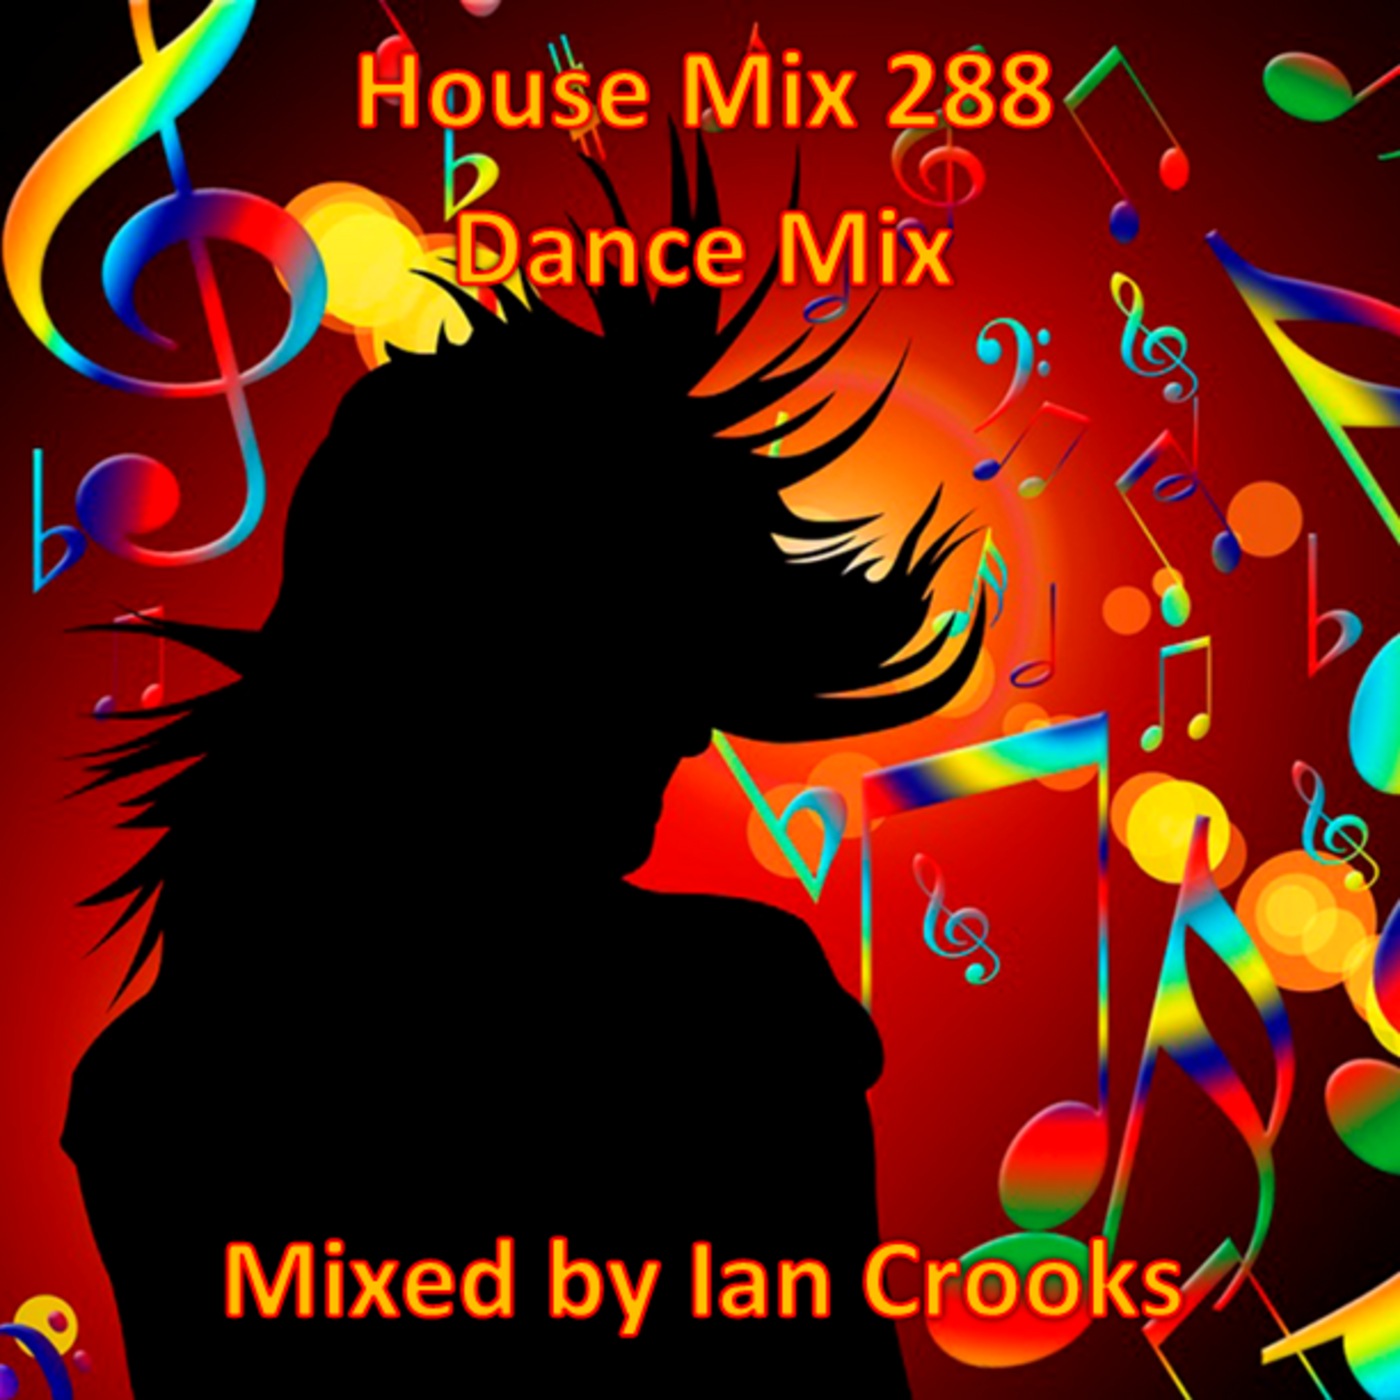 Episode 288: Ian Crooks Mix 288 (Dance Mix)